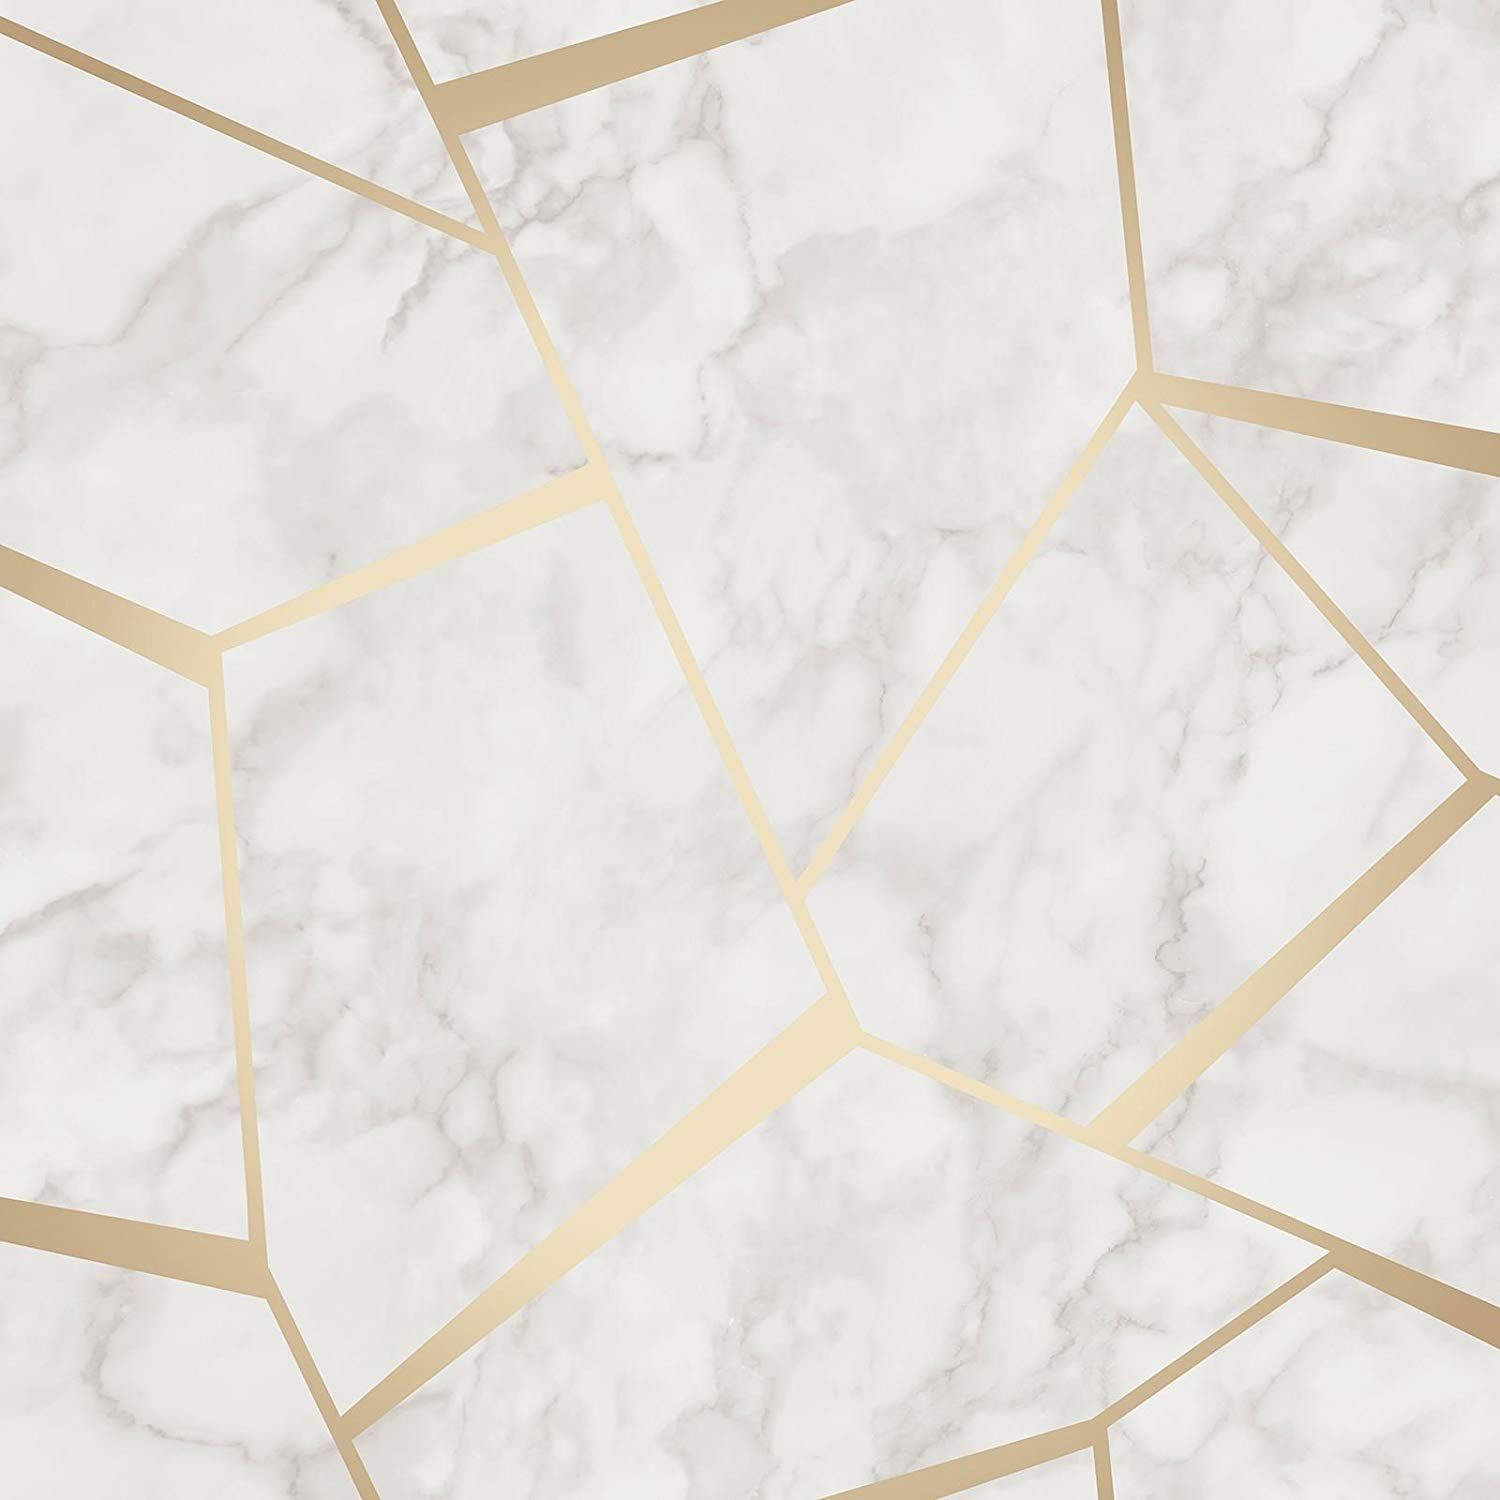 Geometric Design On White Marble Background